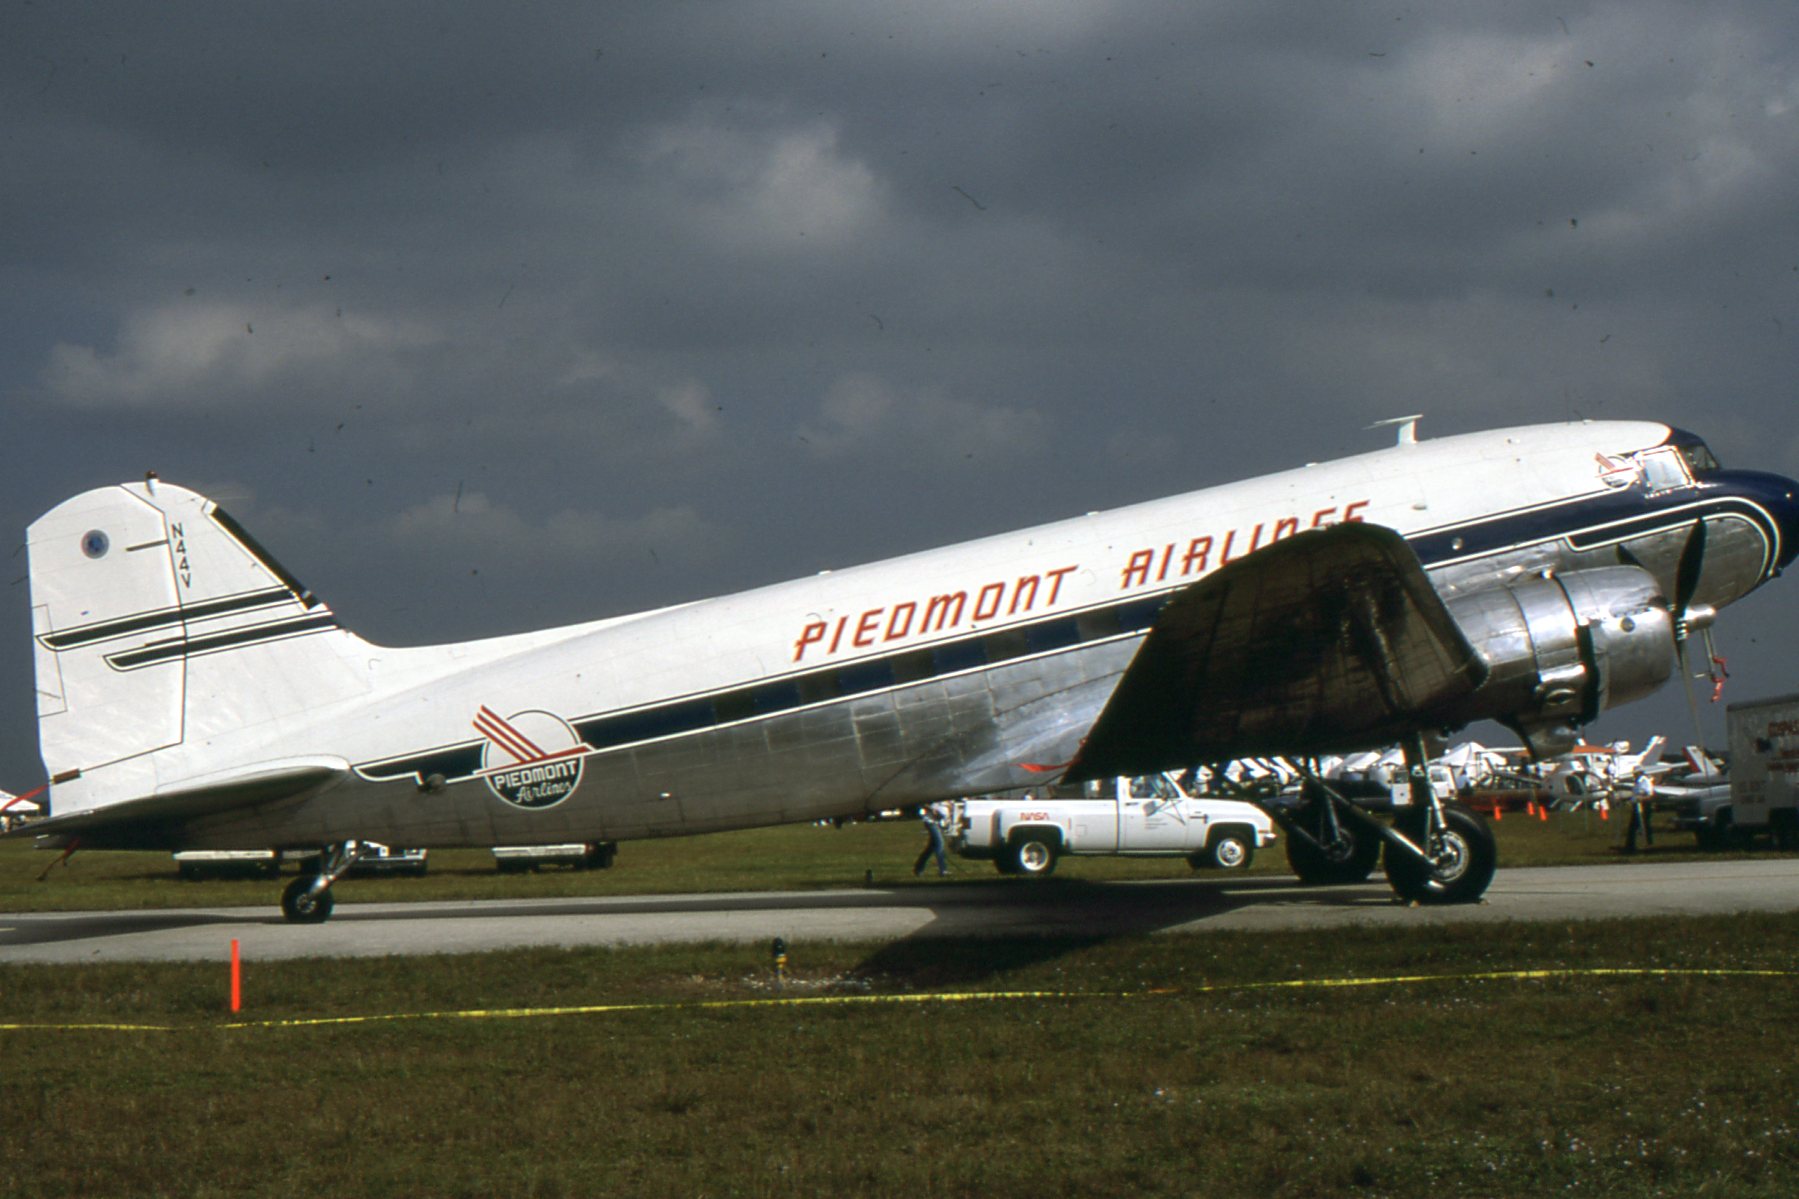 Piedmont DC-3